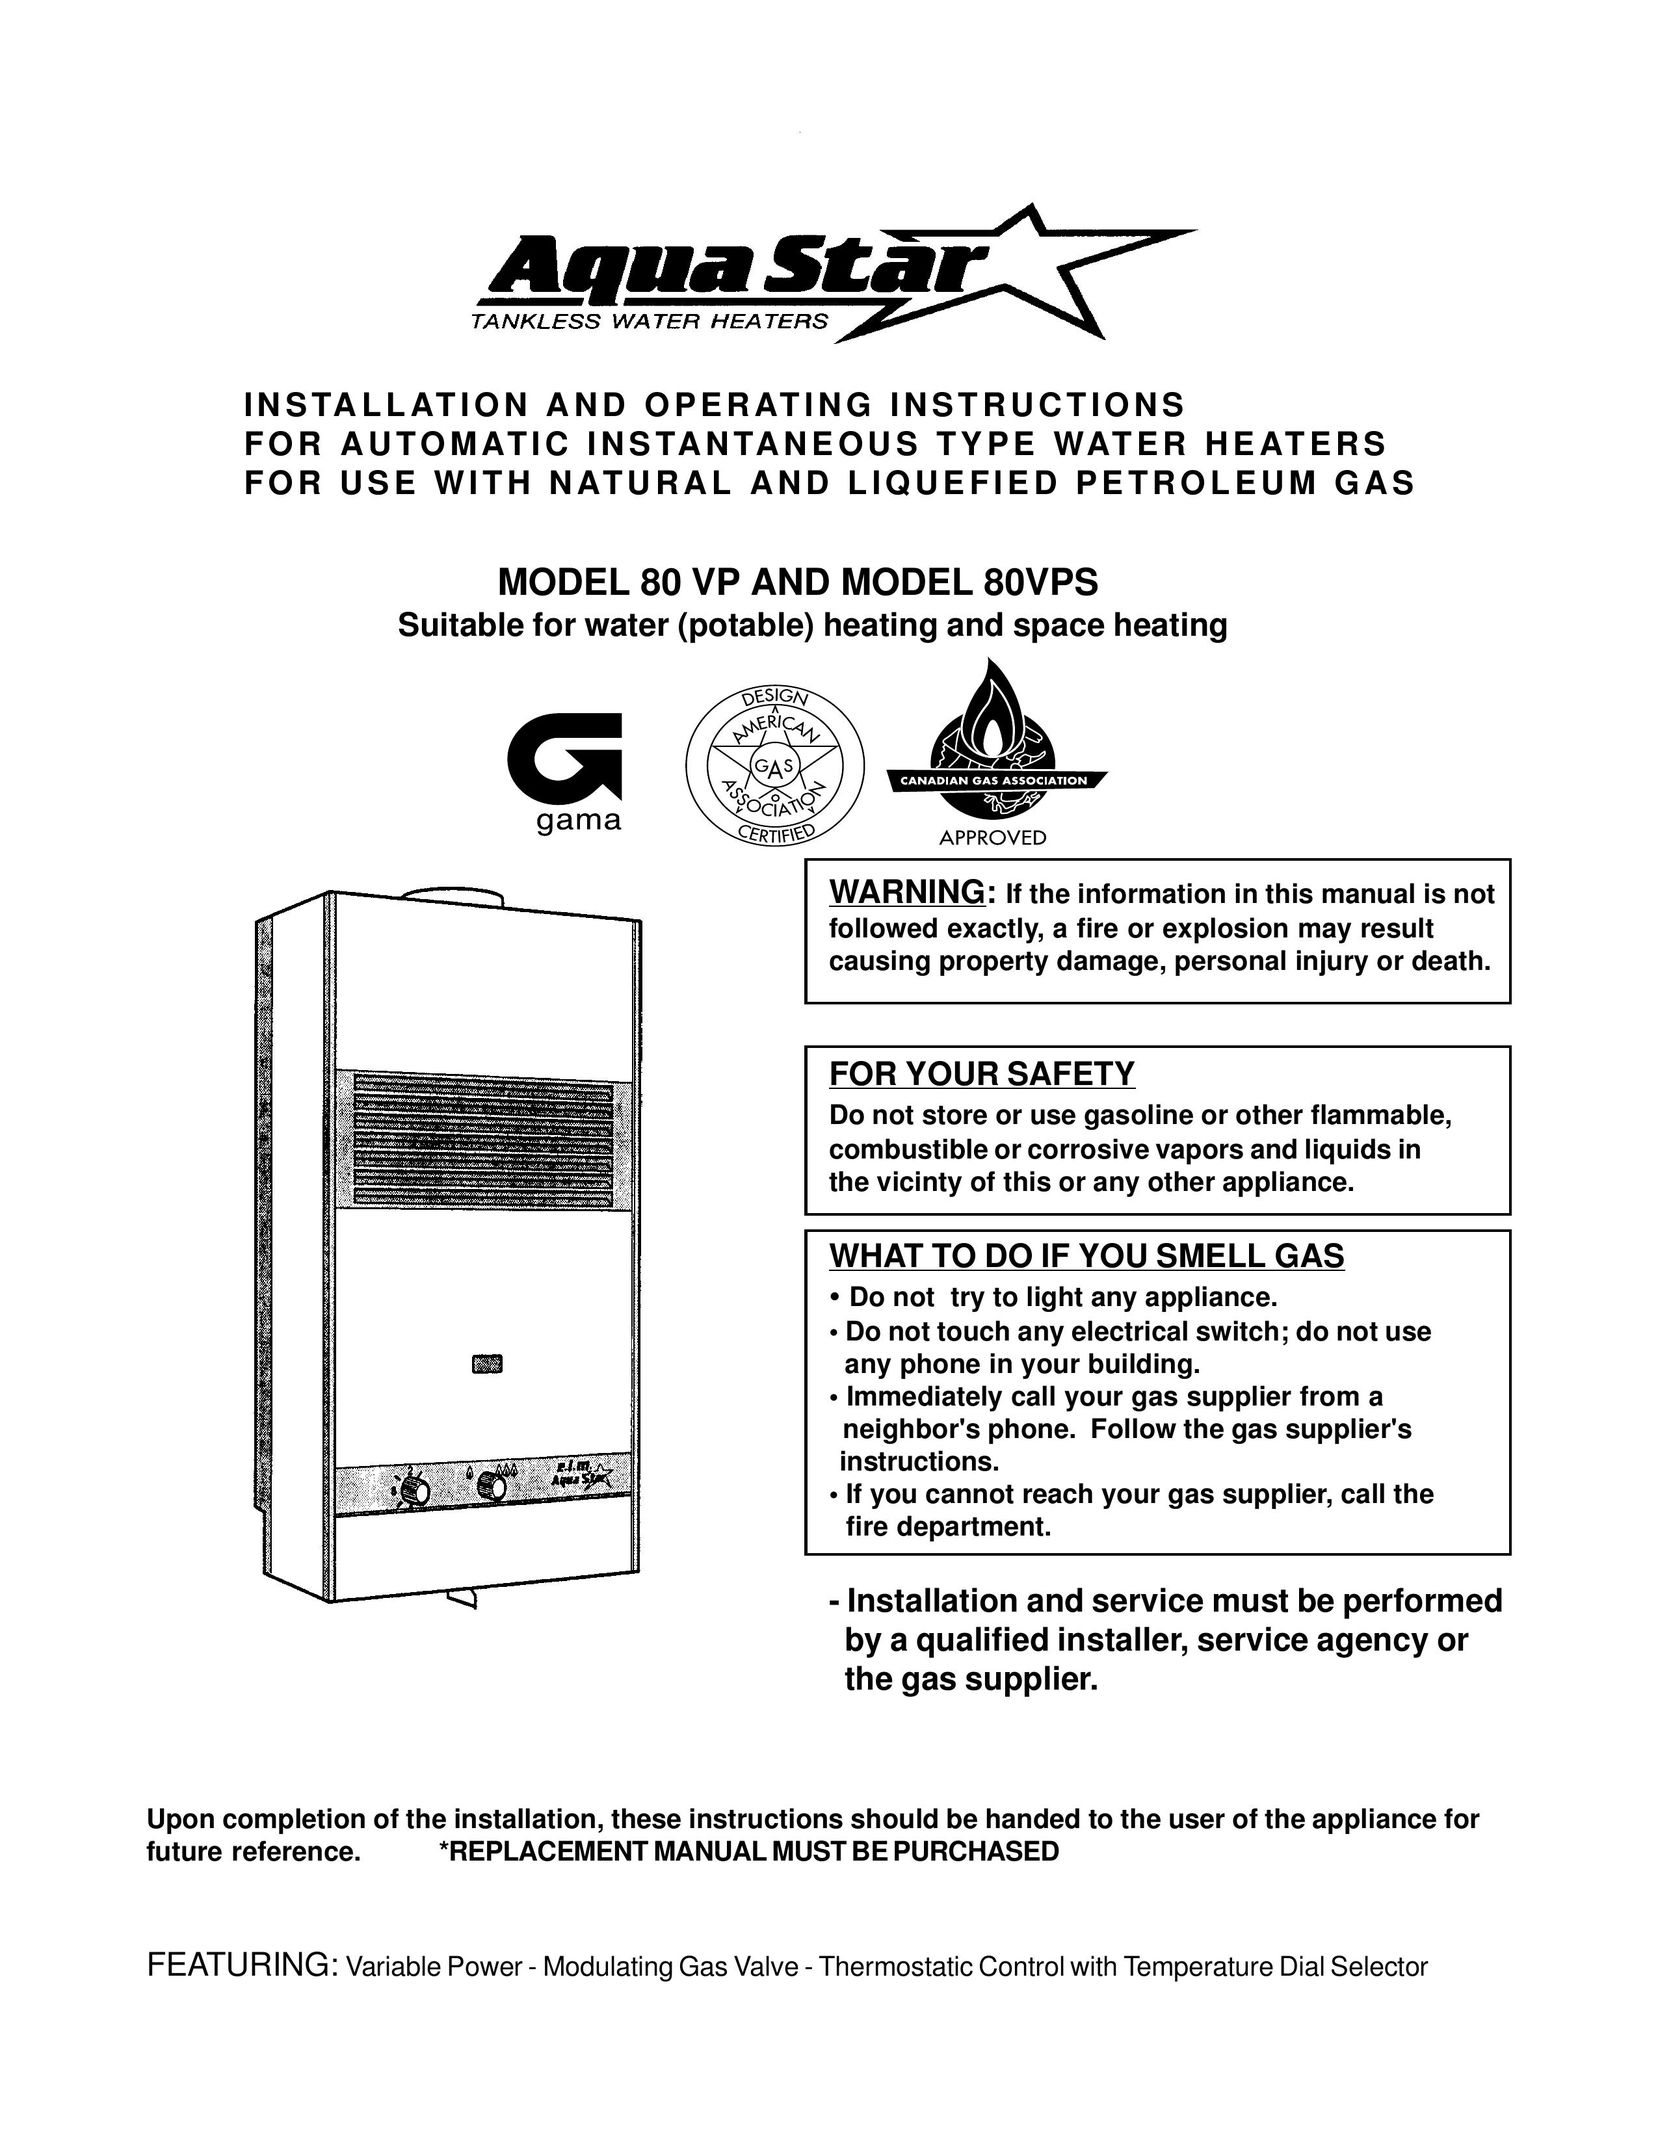 AquaStar 80 VP Water Heater User Manual